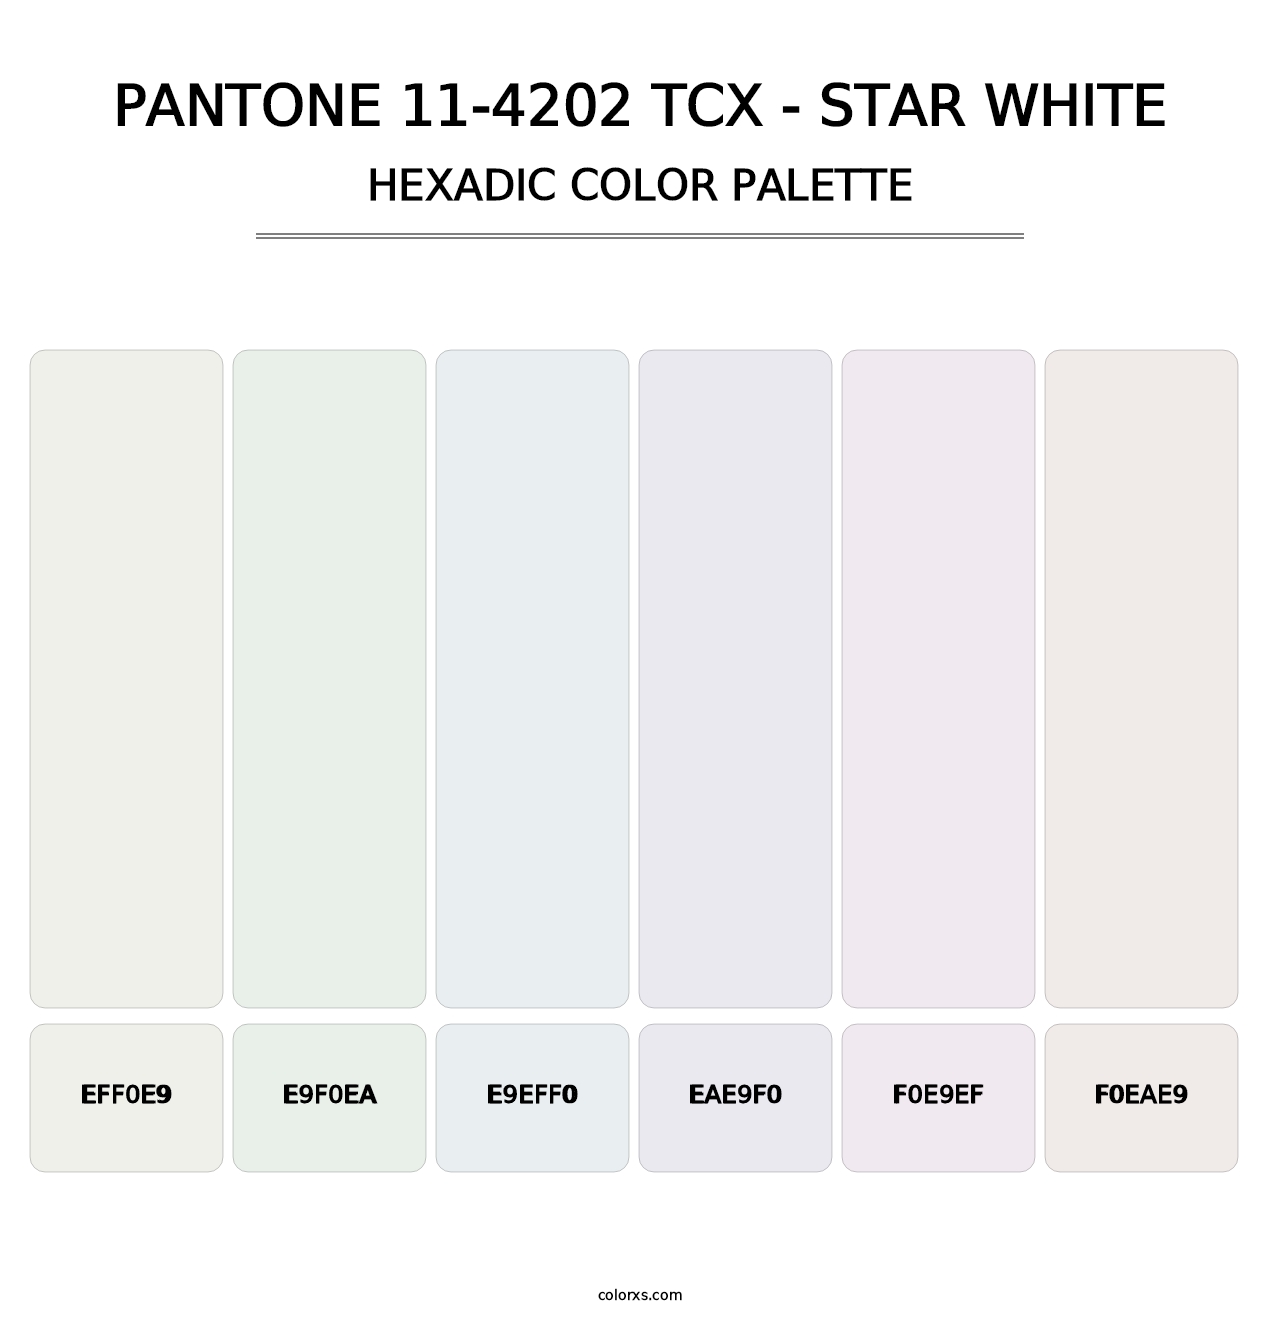 PANTONE 11-4202 TCX - Star White - Hexadic Color Palette